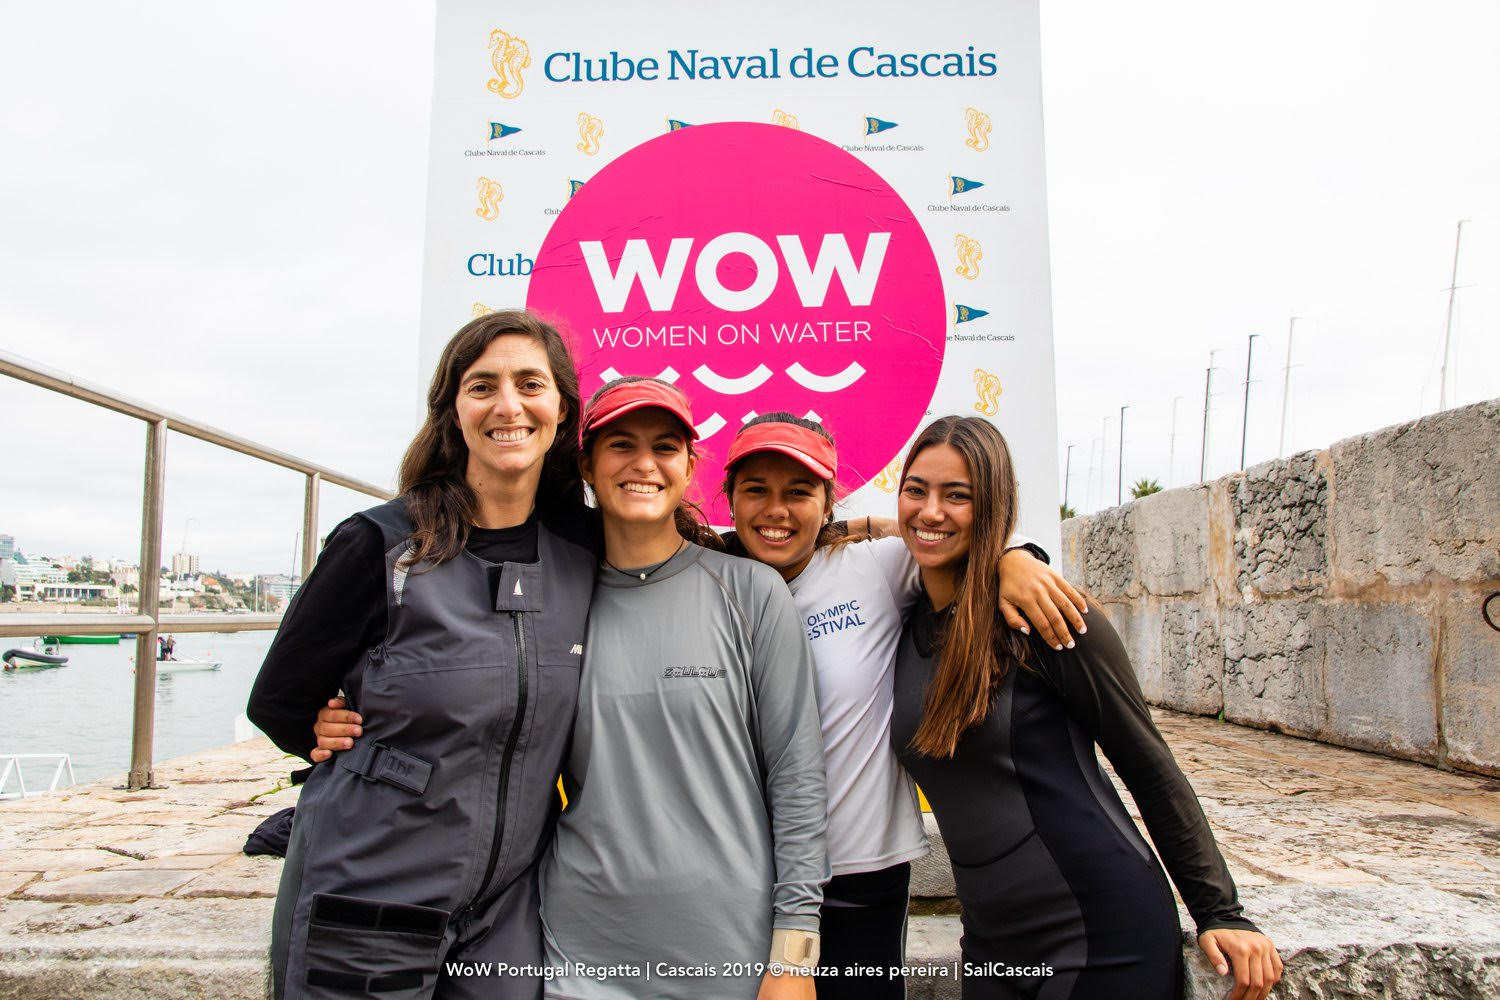 Algarve representado por 3 velejadoras algarvias, Beatriz Gago, Marta Fortunato e Ingrid Fortunato, na Champions League da Vela feminina